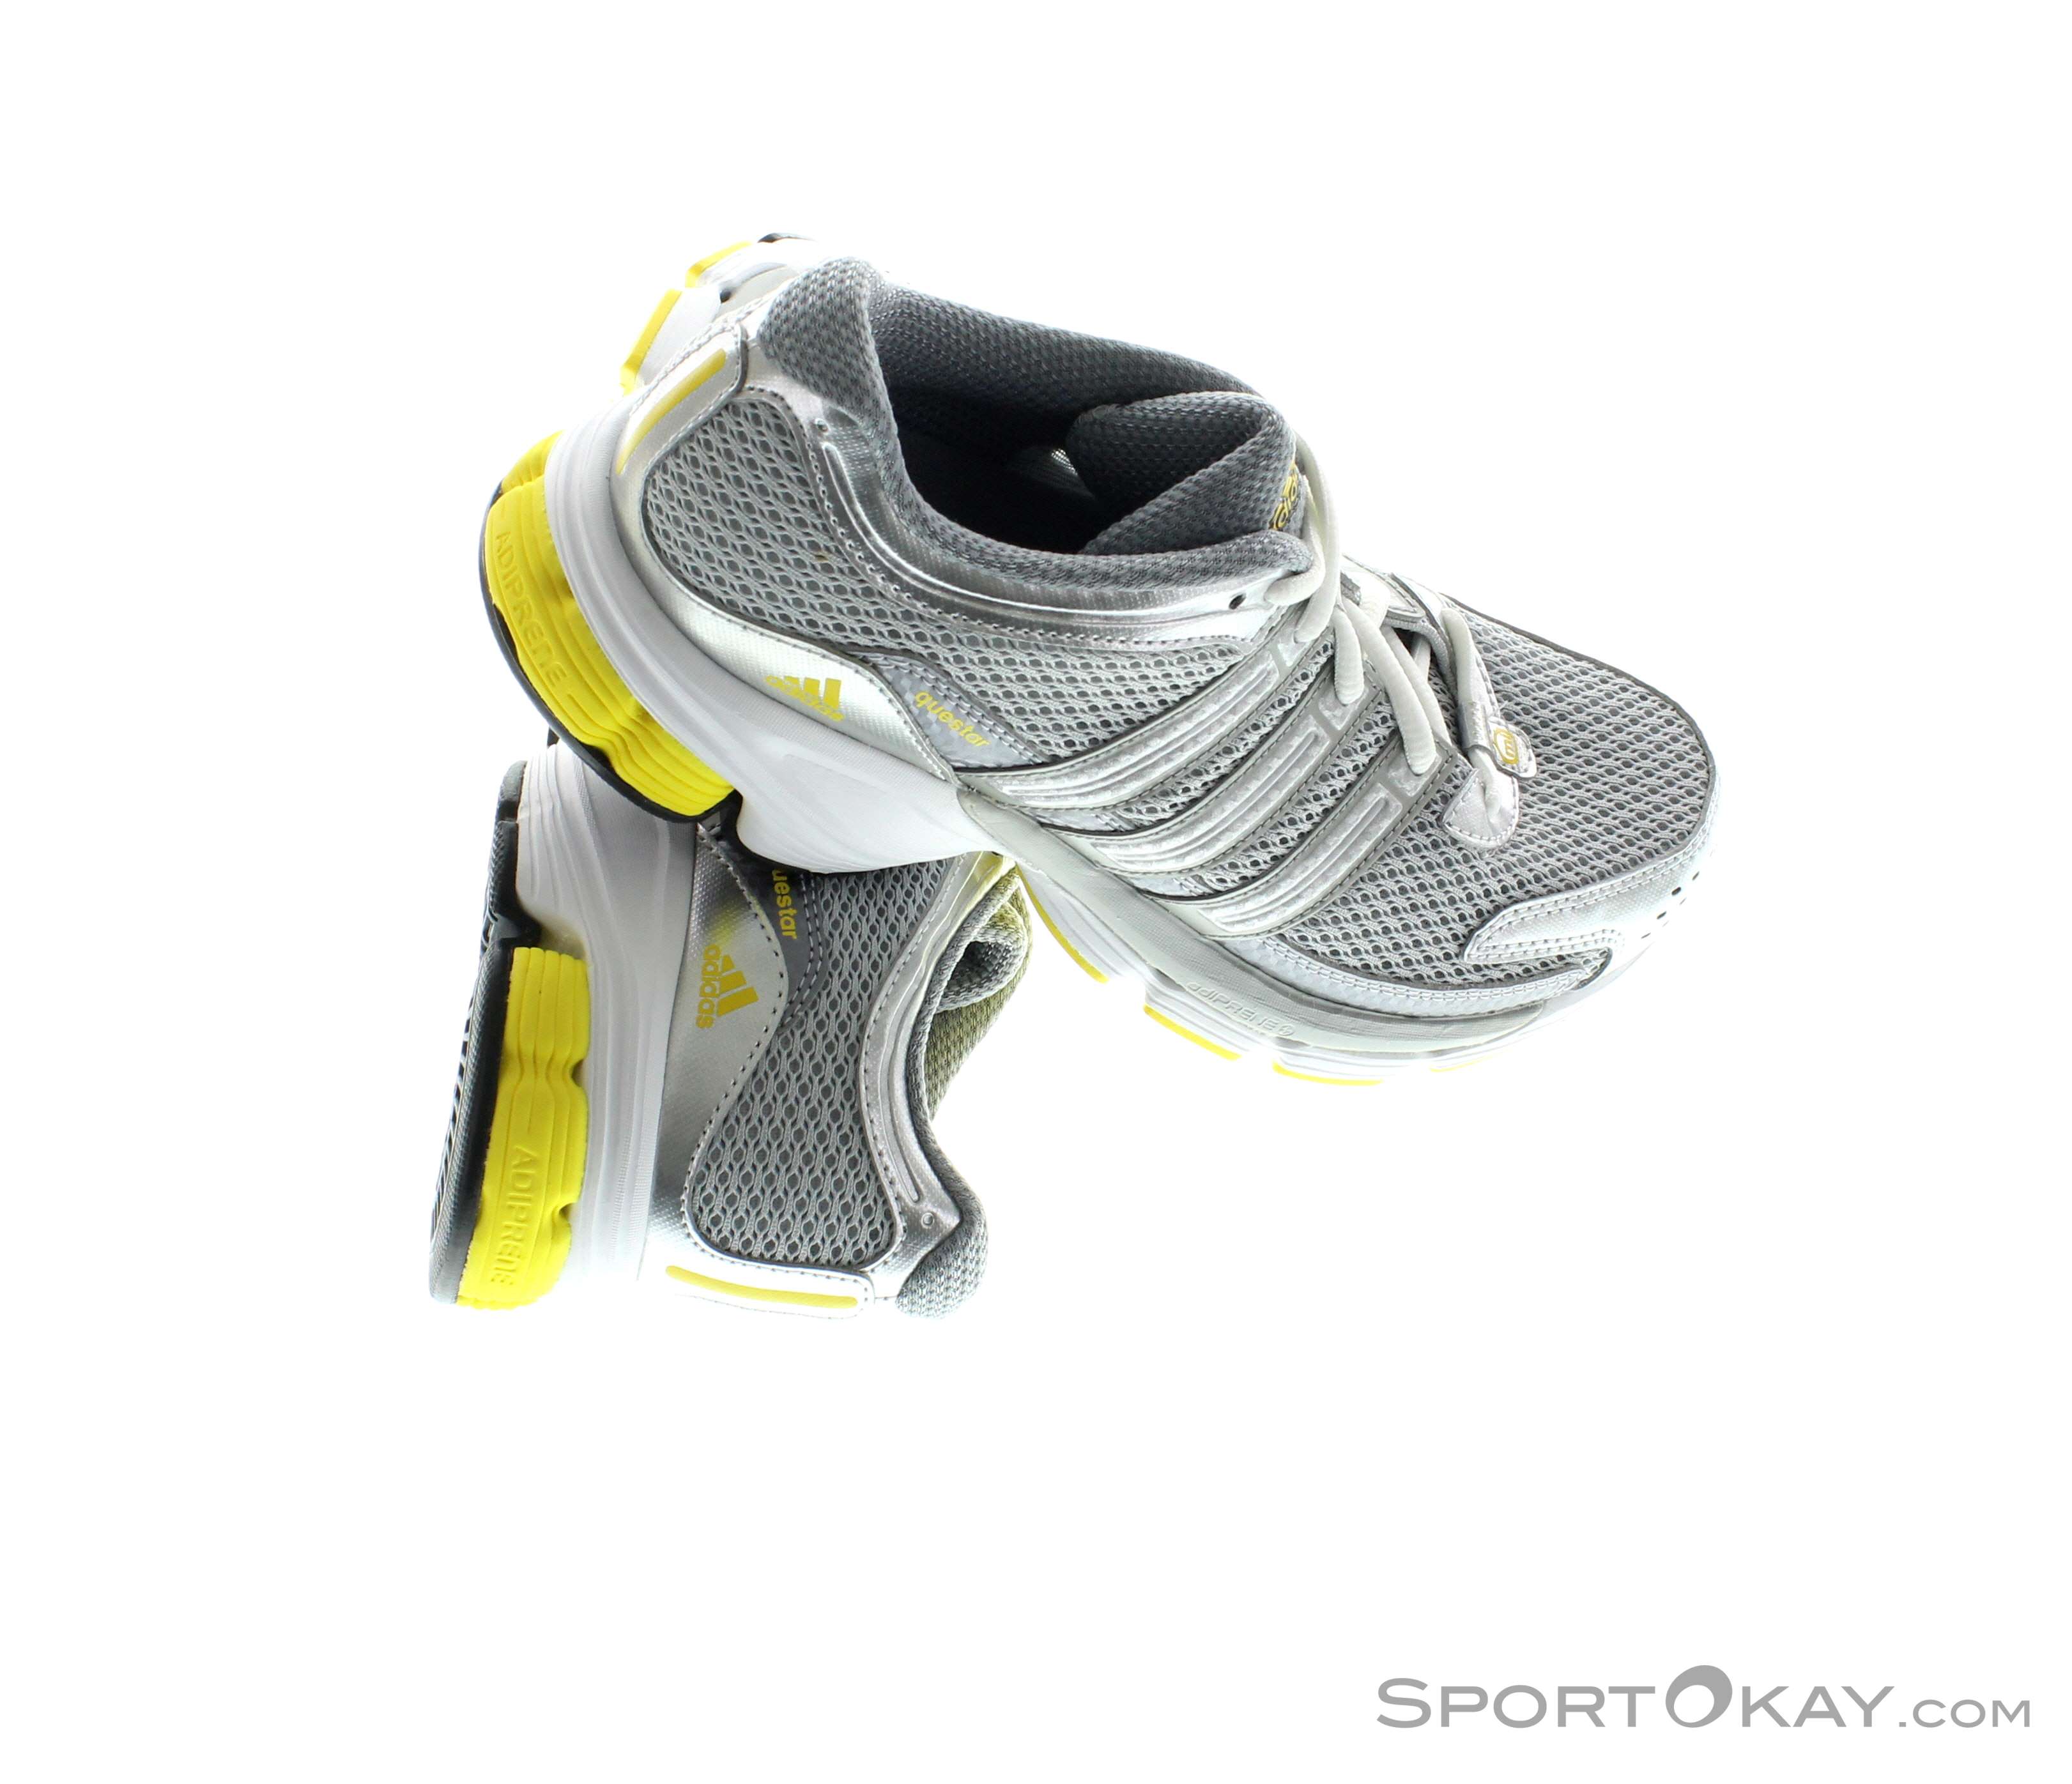 Adidas Questar Cushion W Running Shoes All-Round Running Shoes - Running Shoes - Running - All